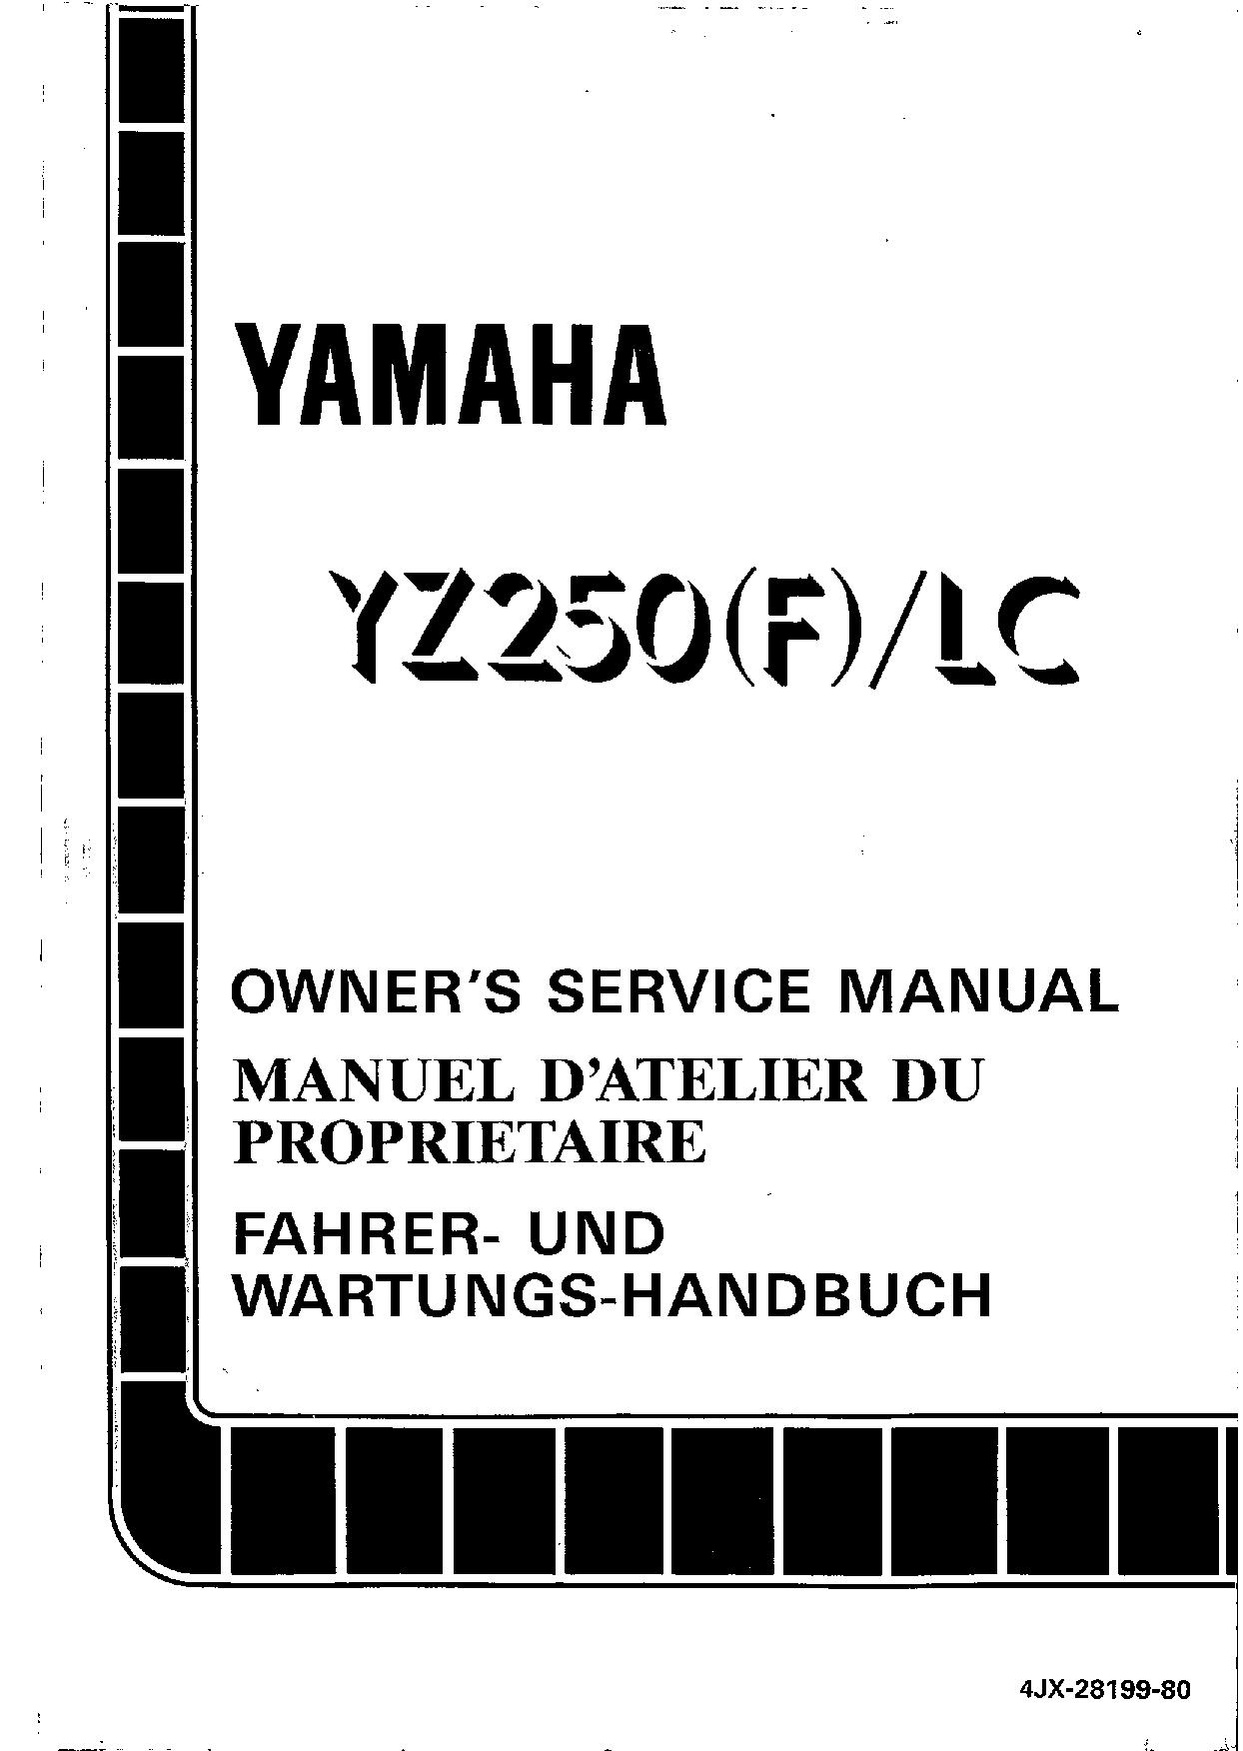 File:1994 Yamaha YZ250 F LC Owners Service Manaul.pdf